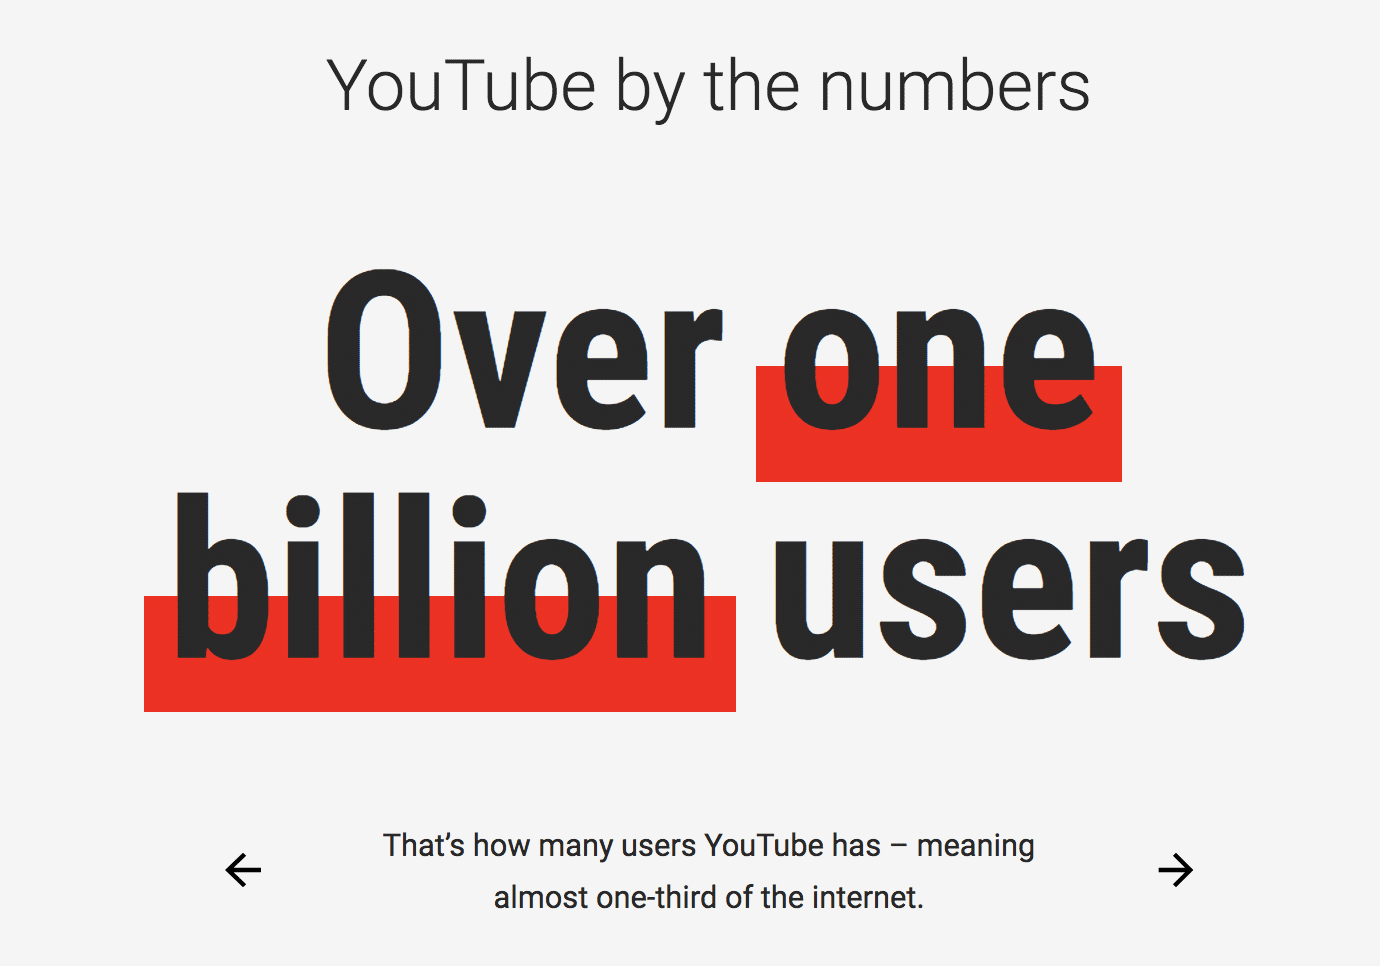 Statistiques YouTube (Source de l'image : YouTube)